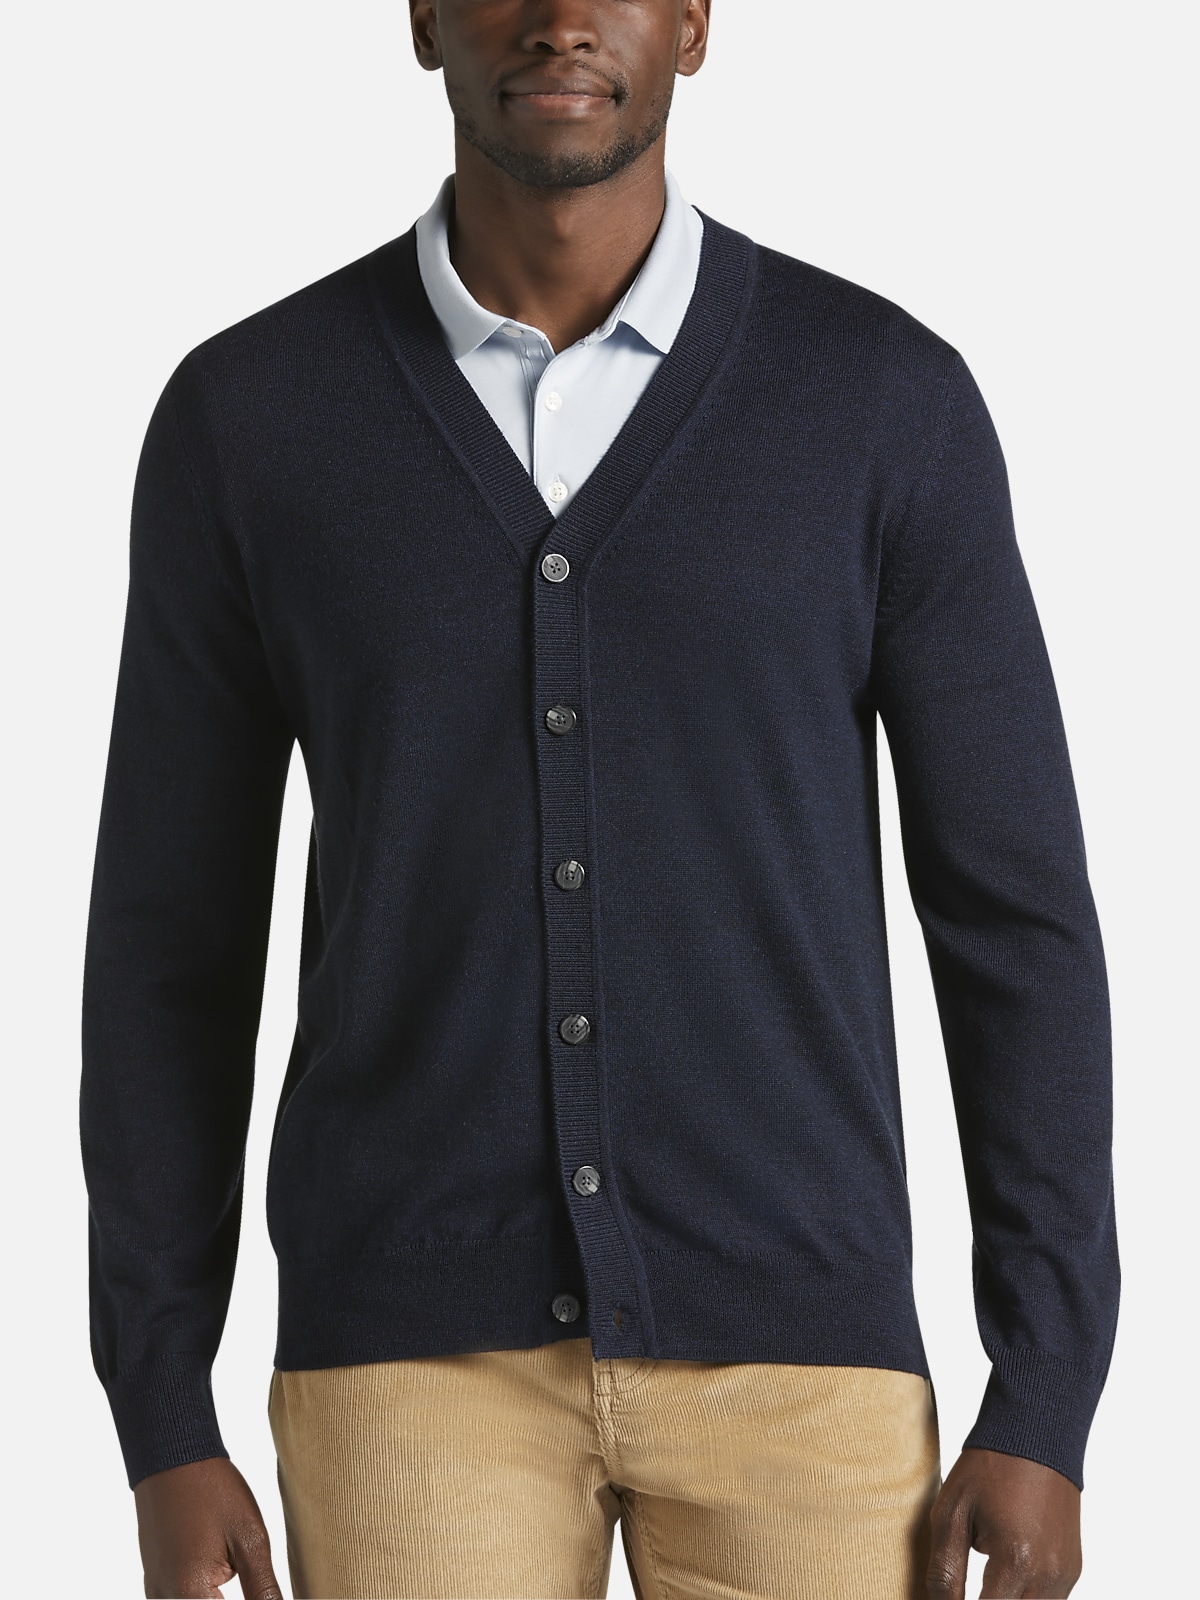 Joseph Abboud Modern Fit Merino Wool Cardigan Sweater | All Clearance ...